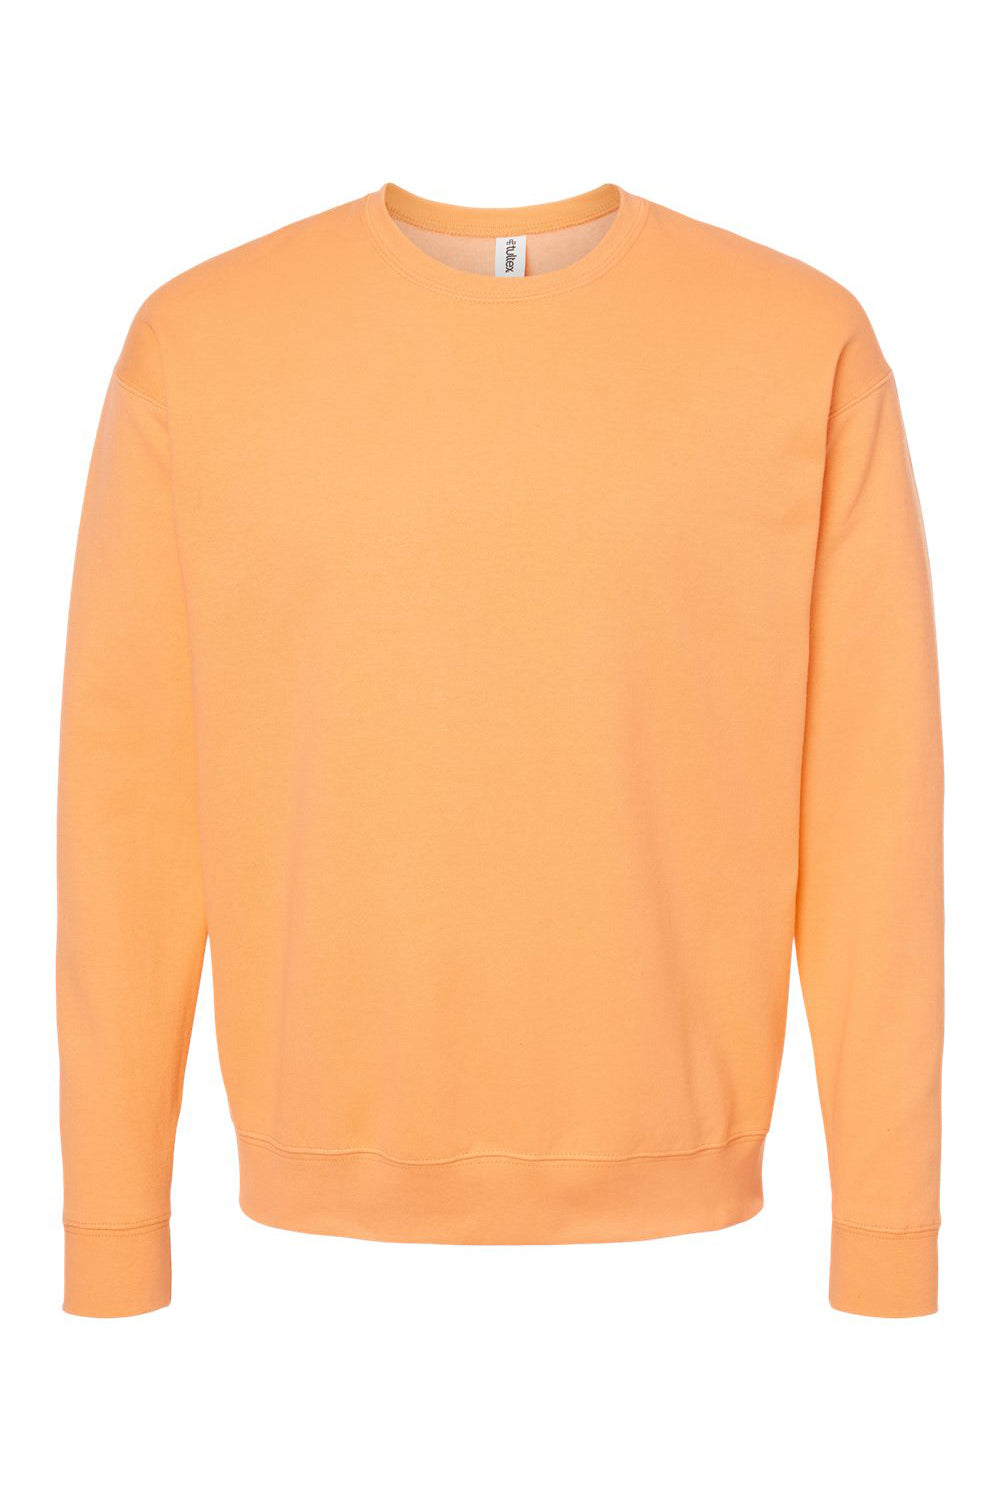 Tultex 340 Mens Fleece Crewneck Sweatshirt Cantaloupe Orange Flat Front